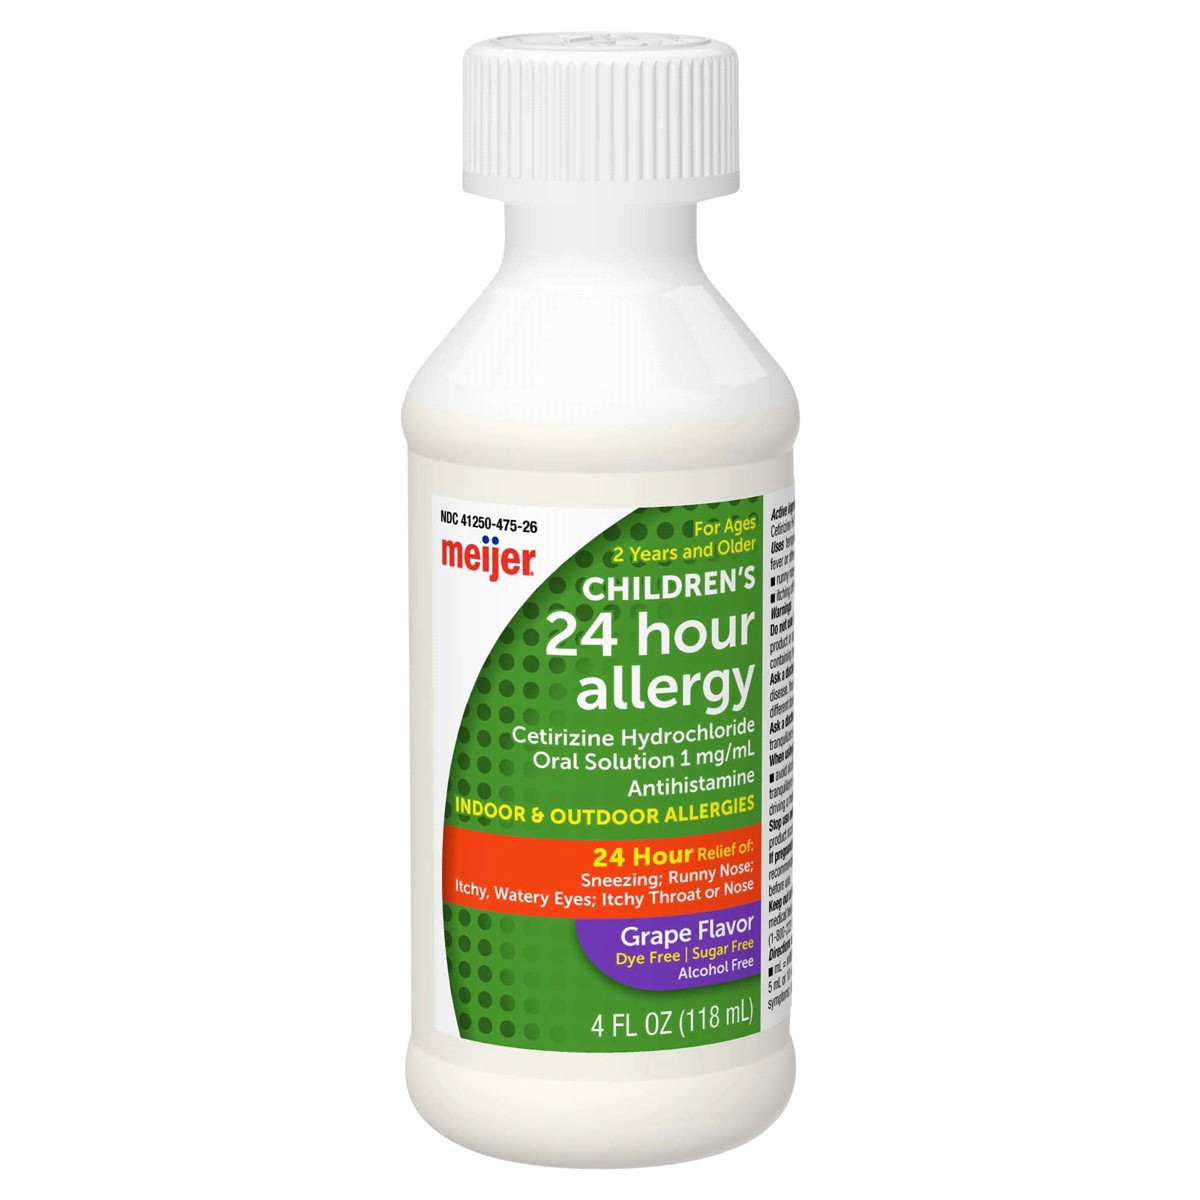 slide 9 of 29, Meijer Cetirizine Hydrochloride All Day Allergy Oral Solution /mL, Grape Flavor, 1 mg, 4 fl oz